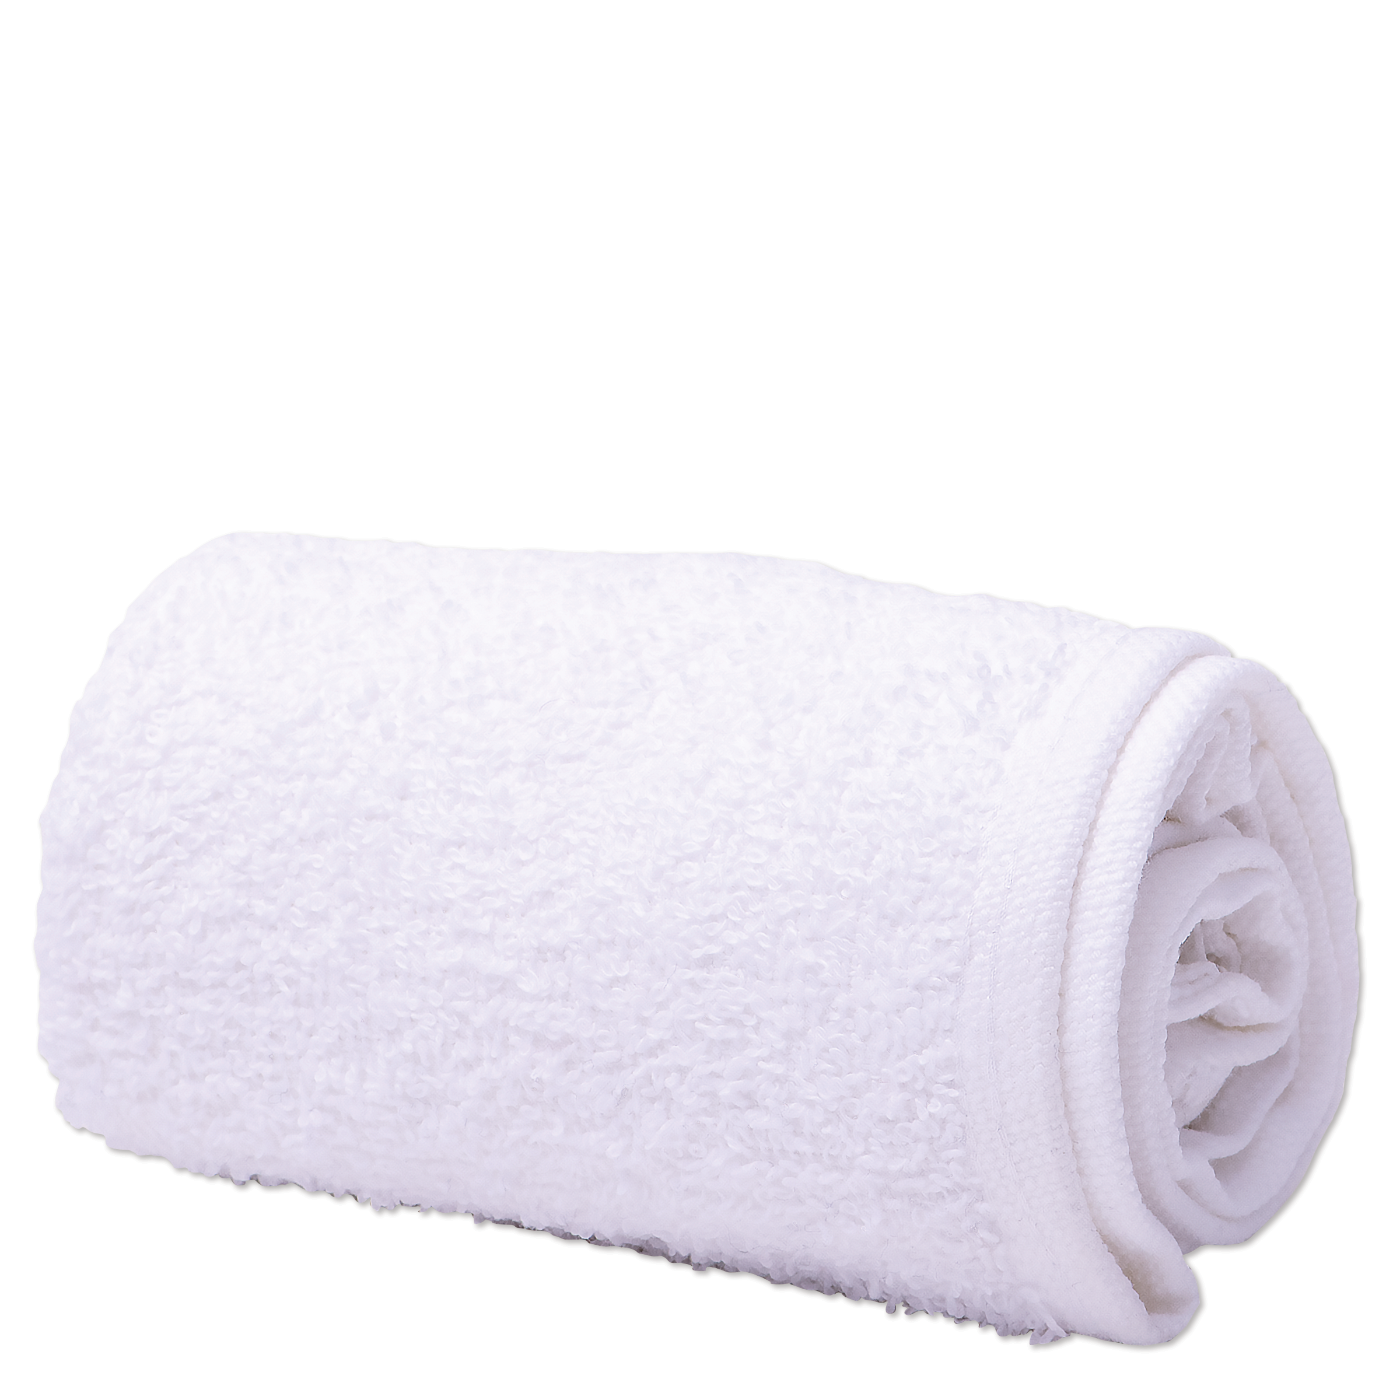 Terry Cloth Hand Towel, 8" x 24" - White